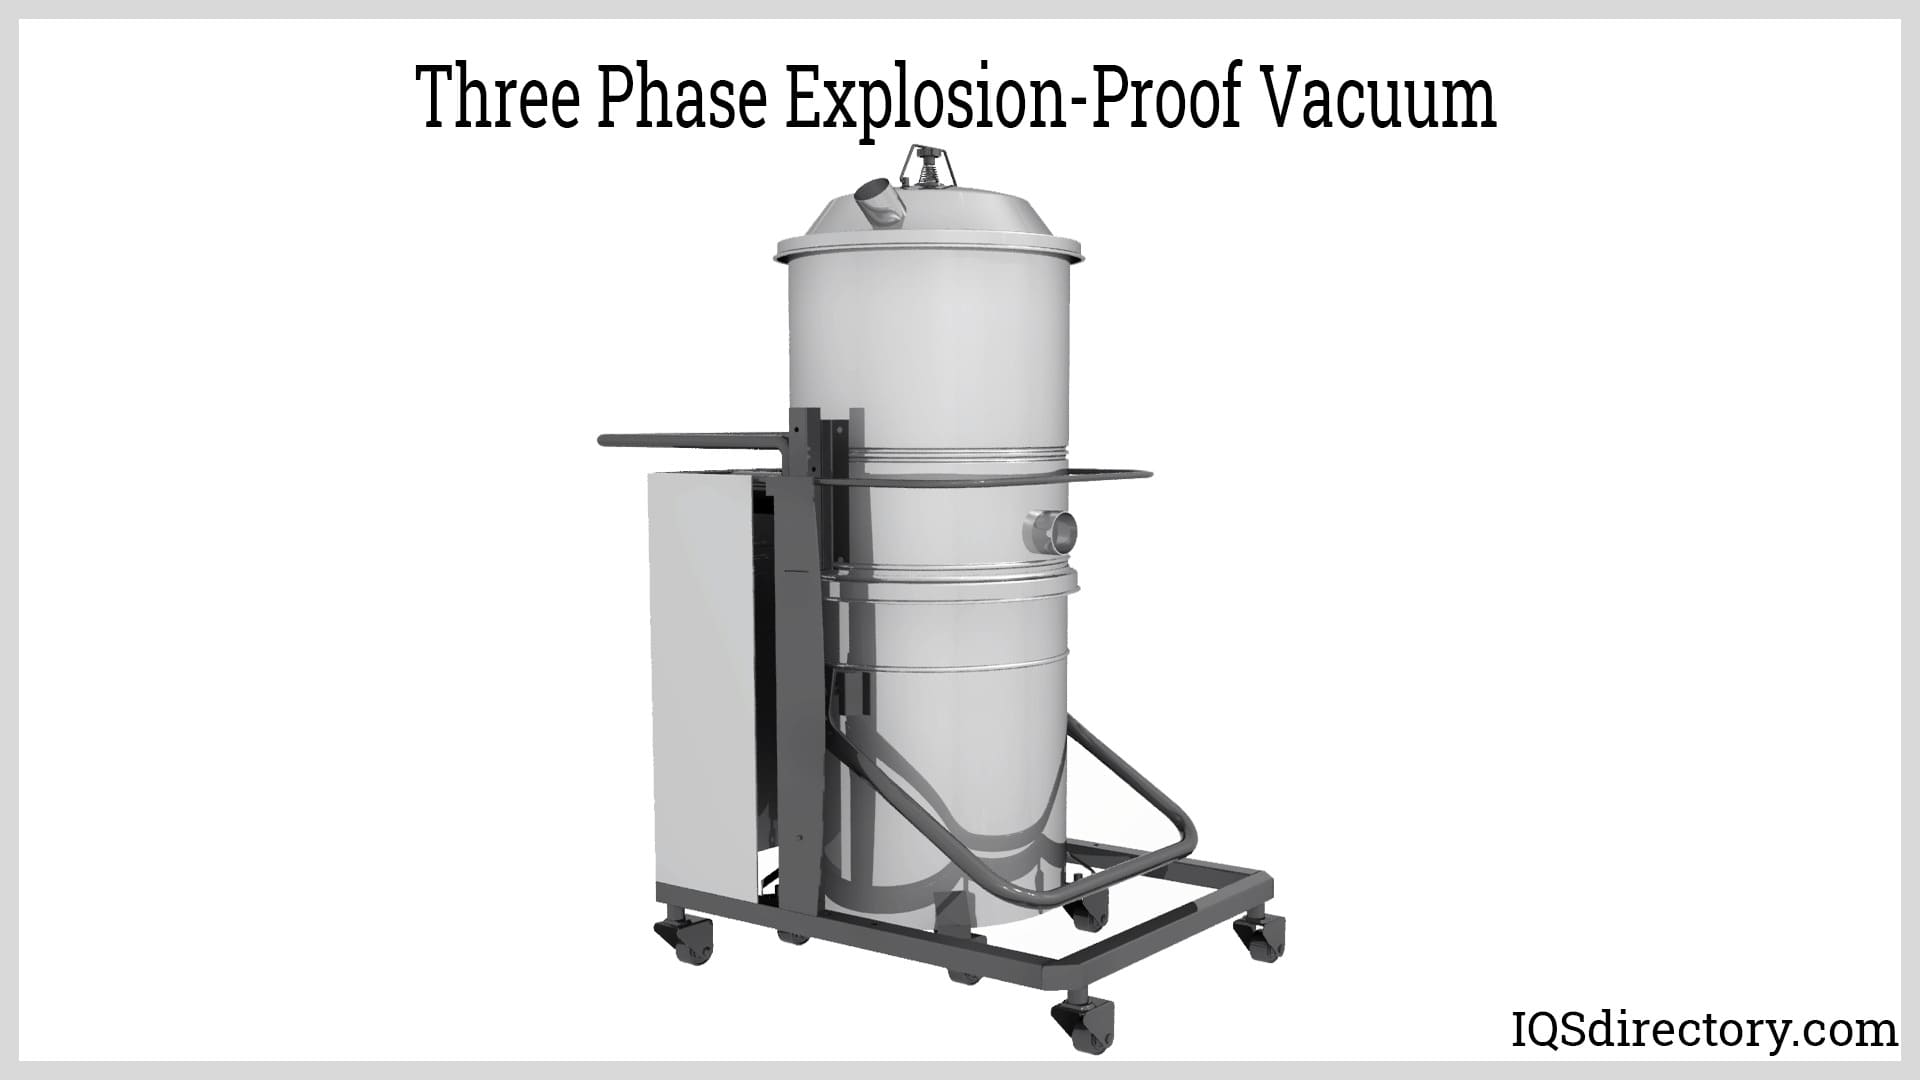 Three Phase Explosion-Proof Vacuum